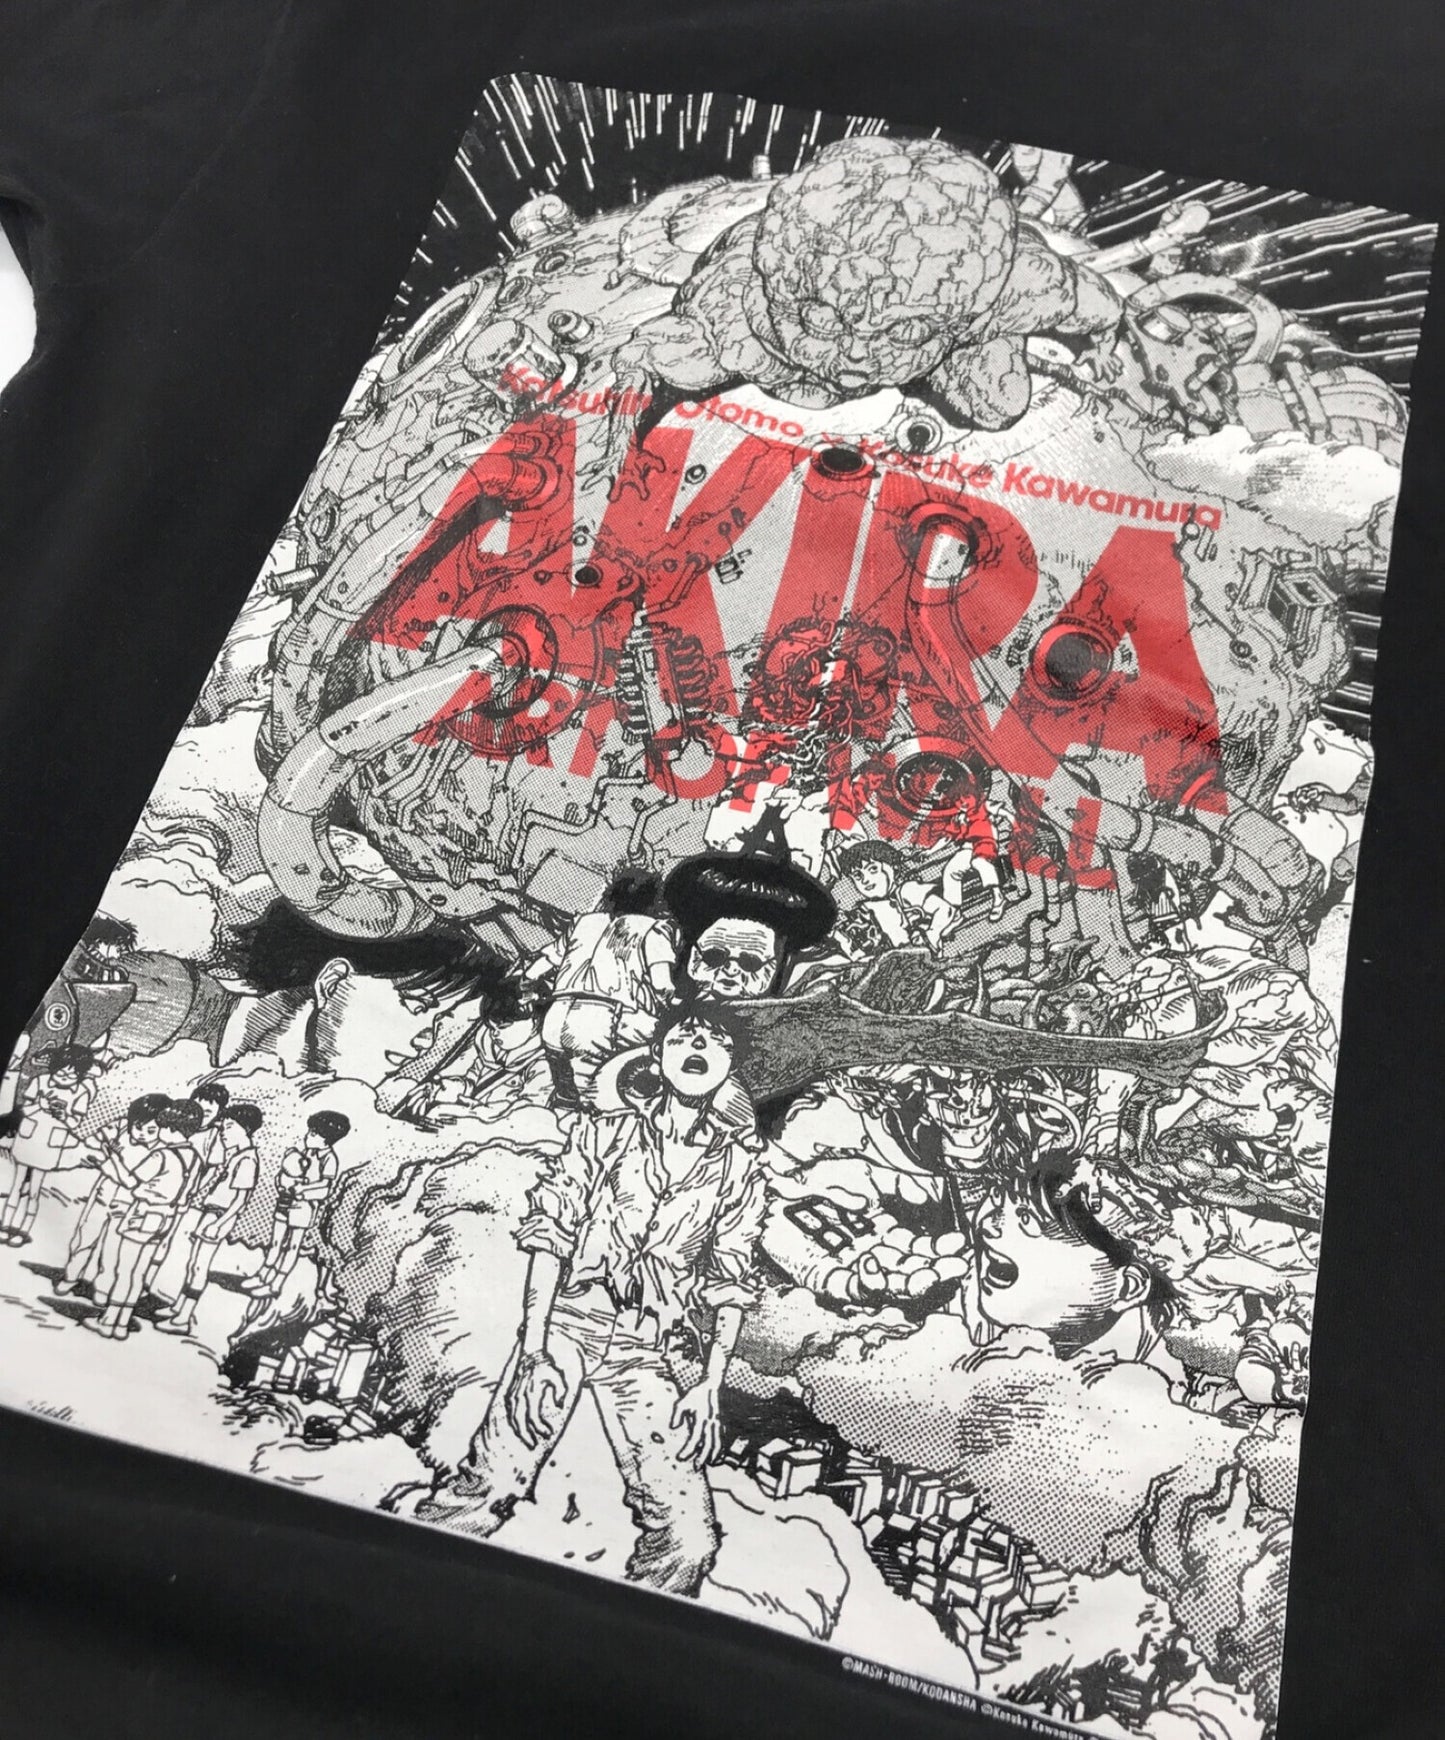 Akira Art of Wall Shibuya Parco Limited Printed T-Shirt